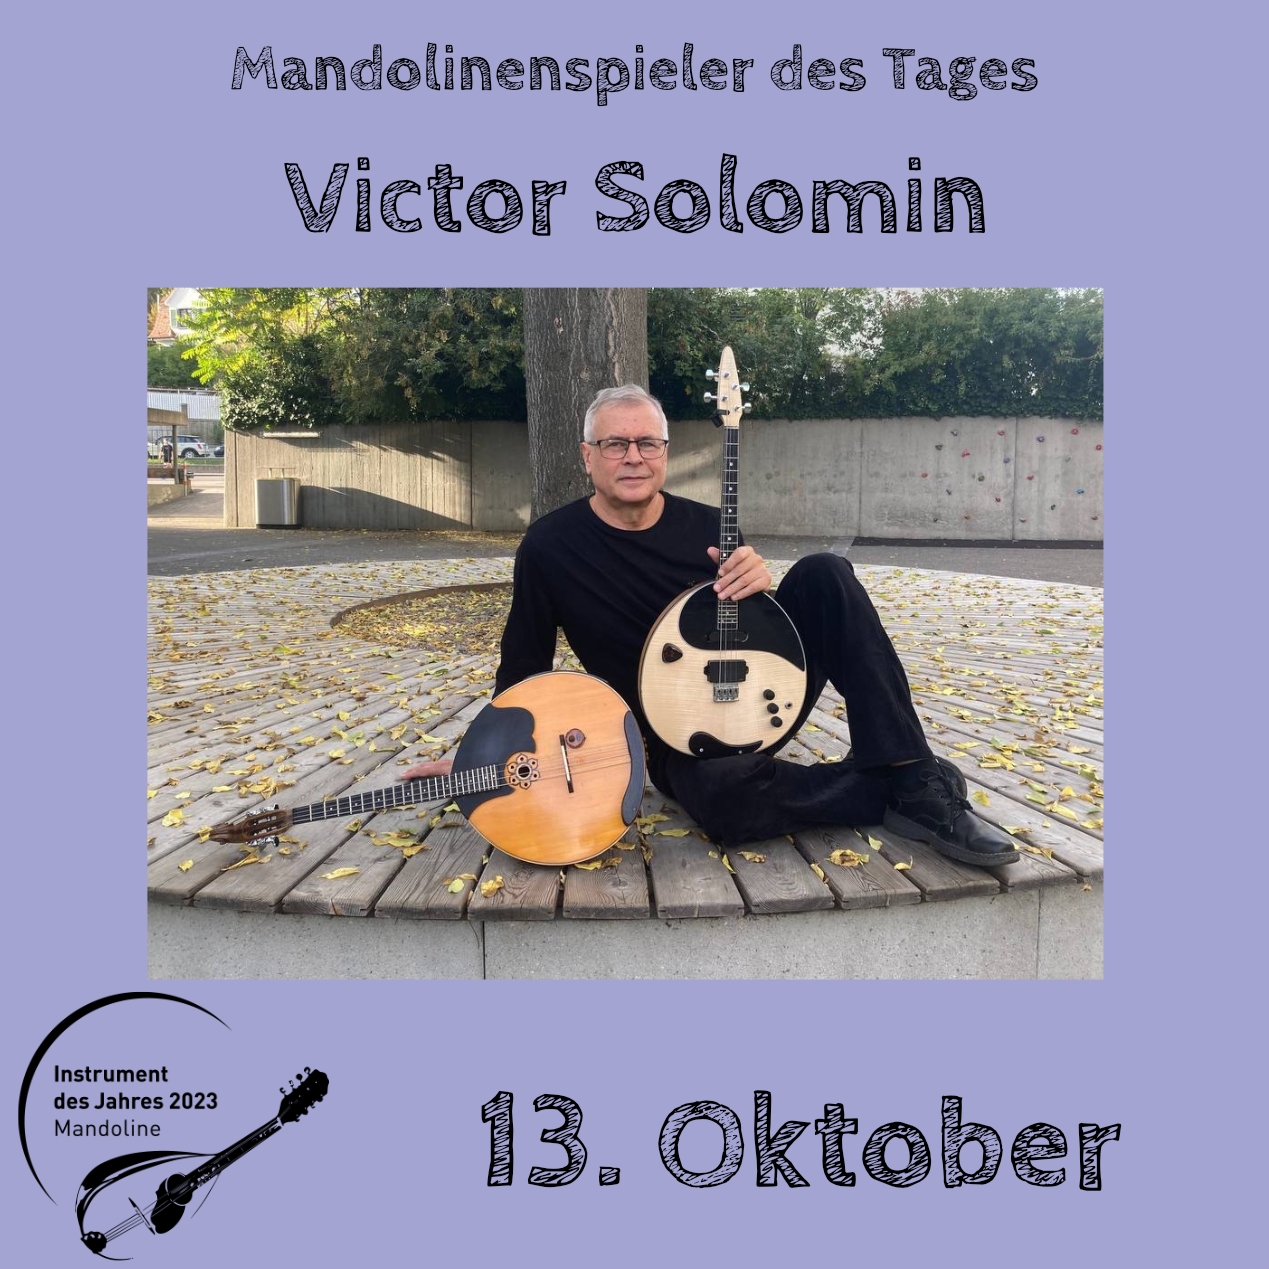 13. Oktober - Victor Solomin Instrument des Jahres 2023 Mandolinenspieler Mandolinenspielerin des Tages